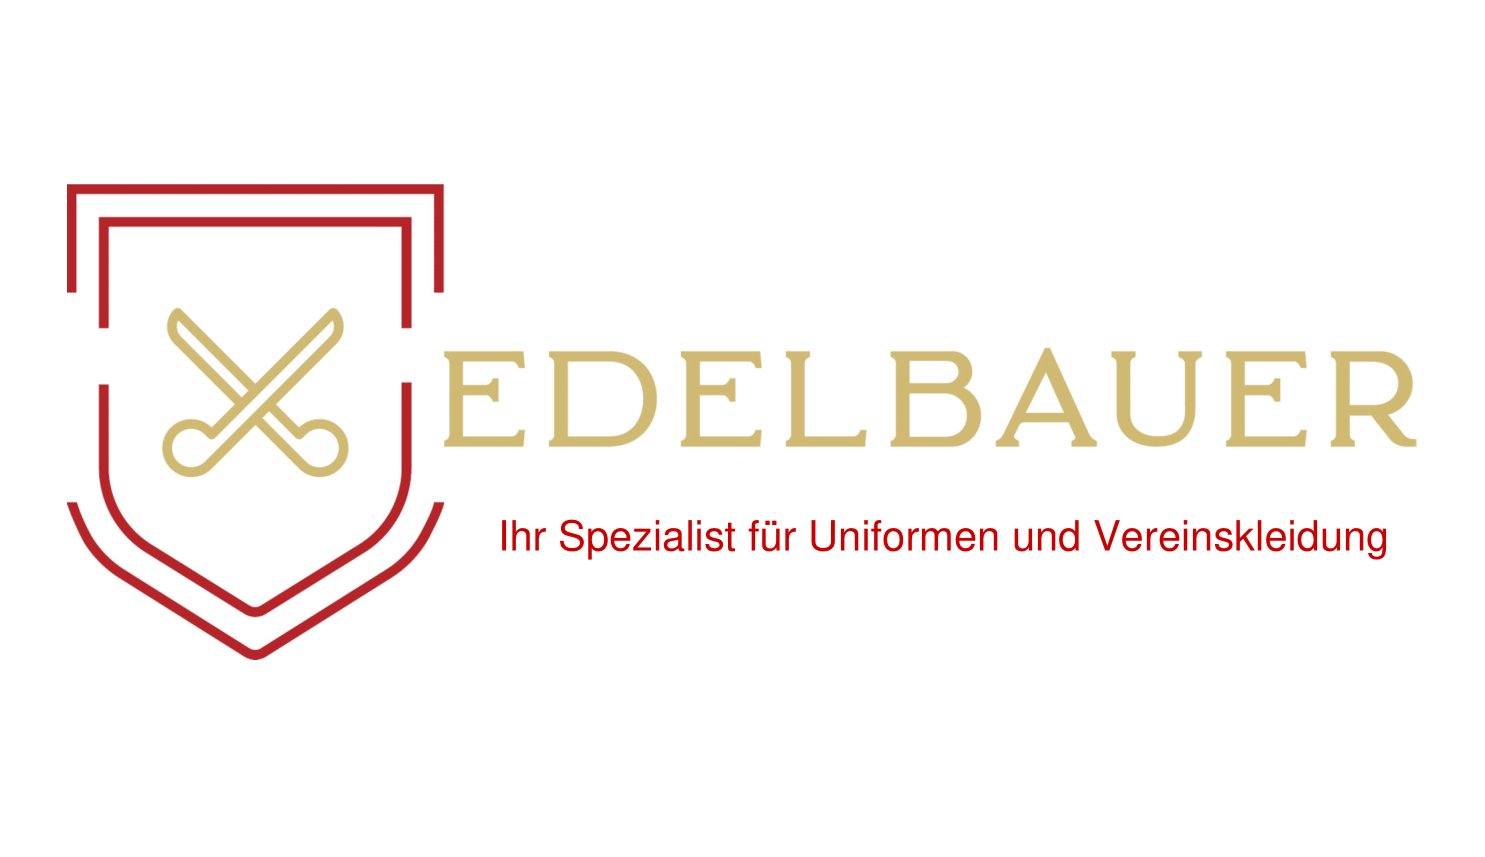 Edelbauer